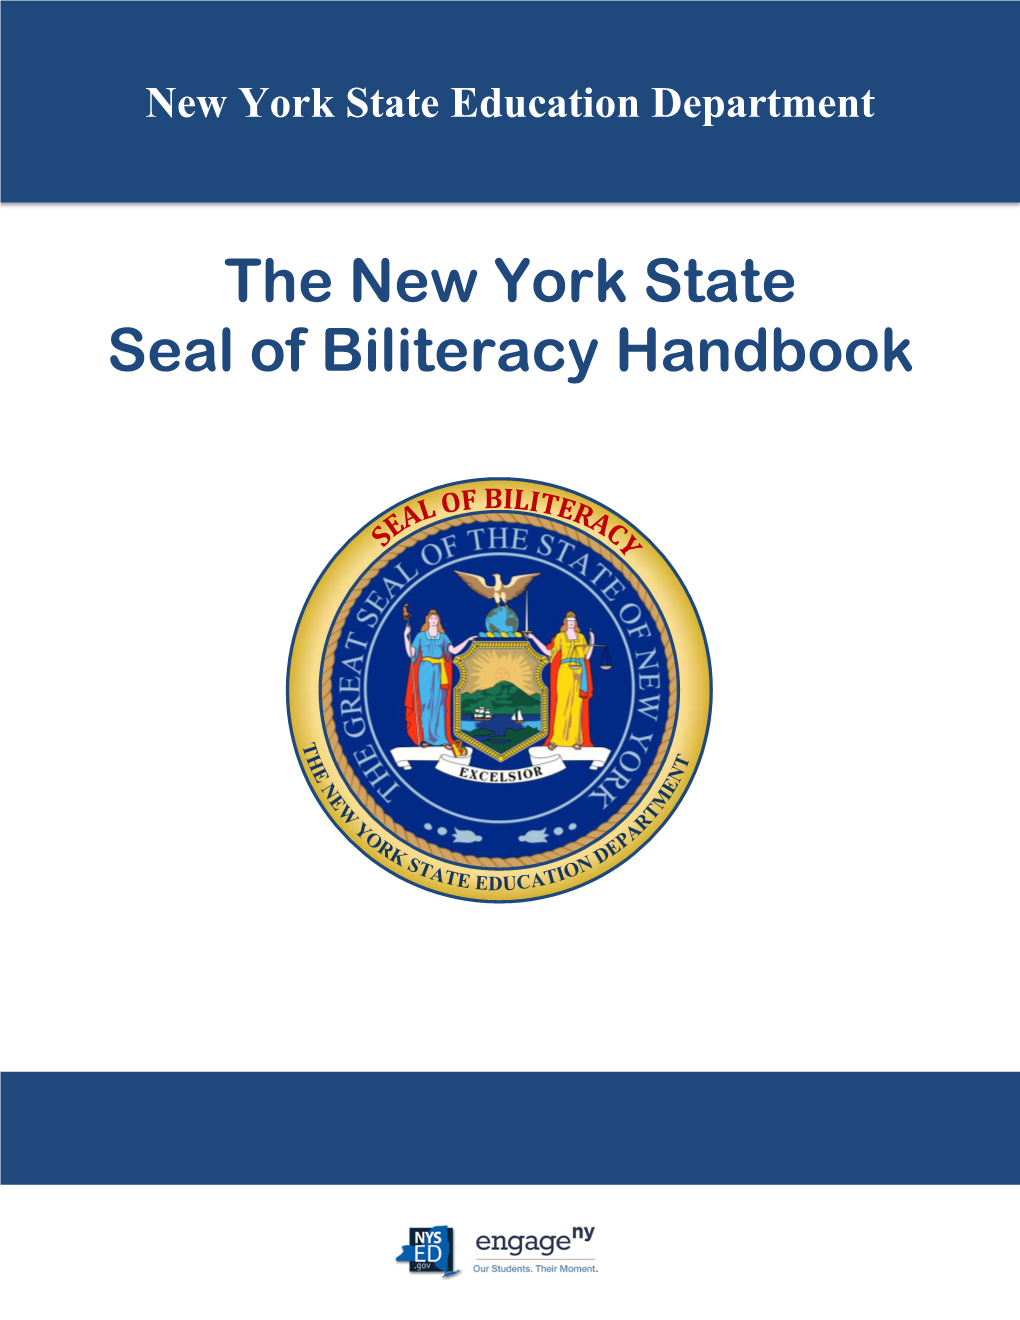 The New York State Seal of Biliteracy Handbook